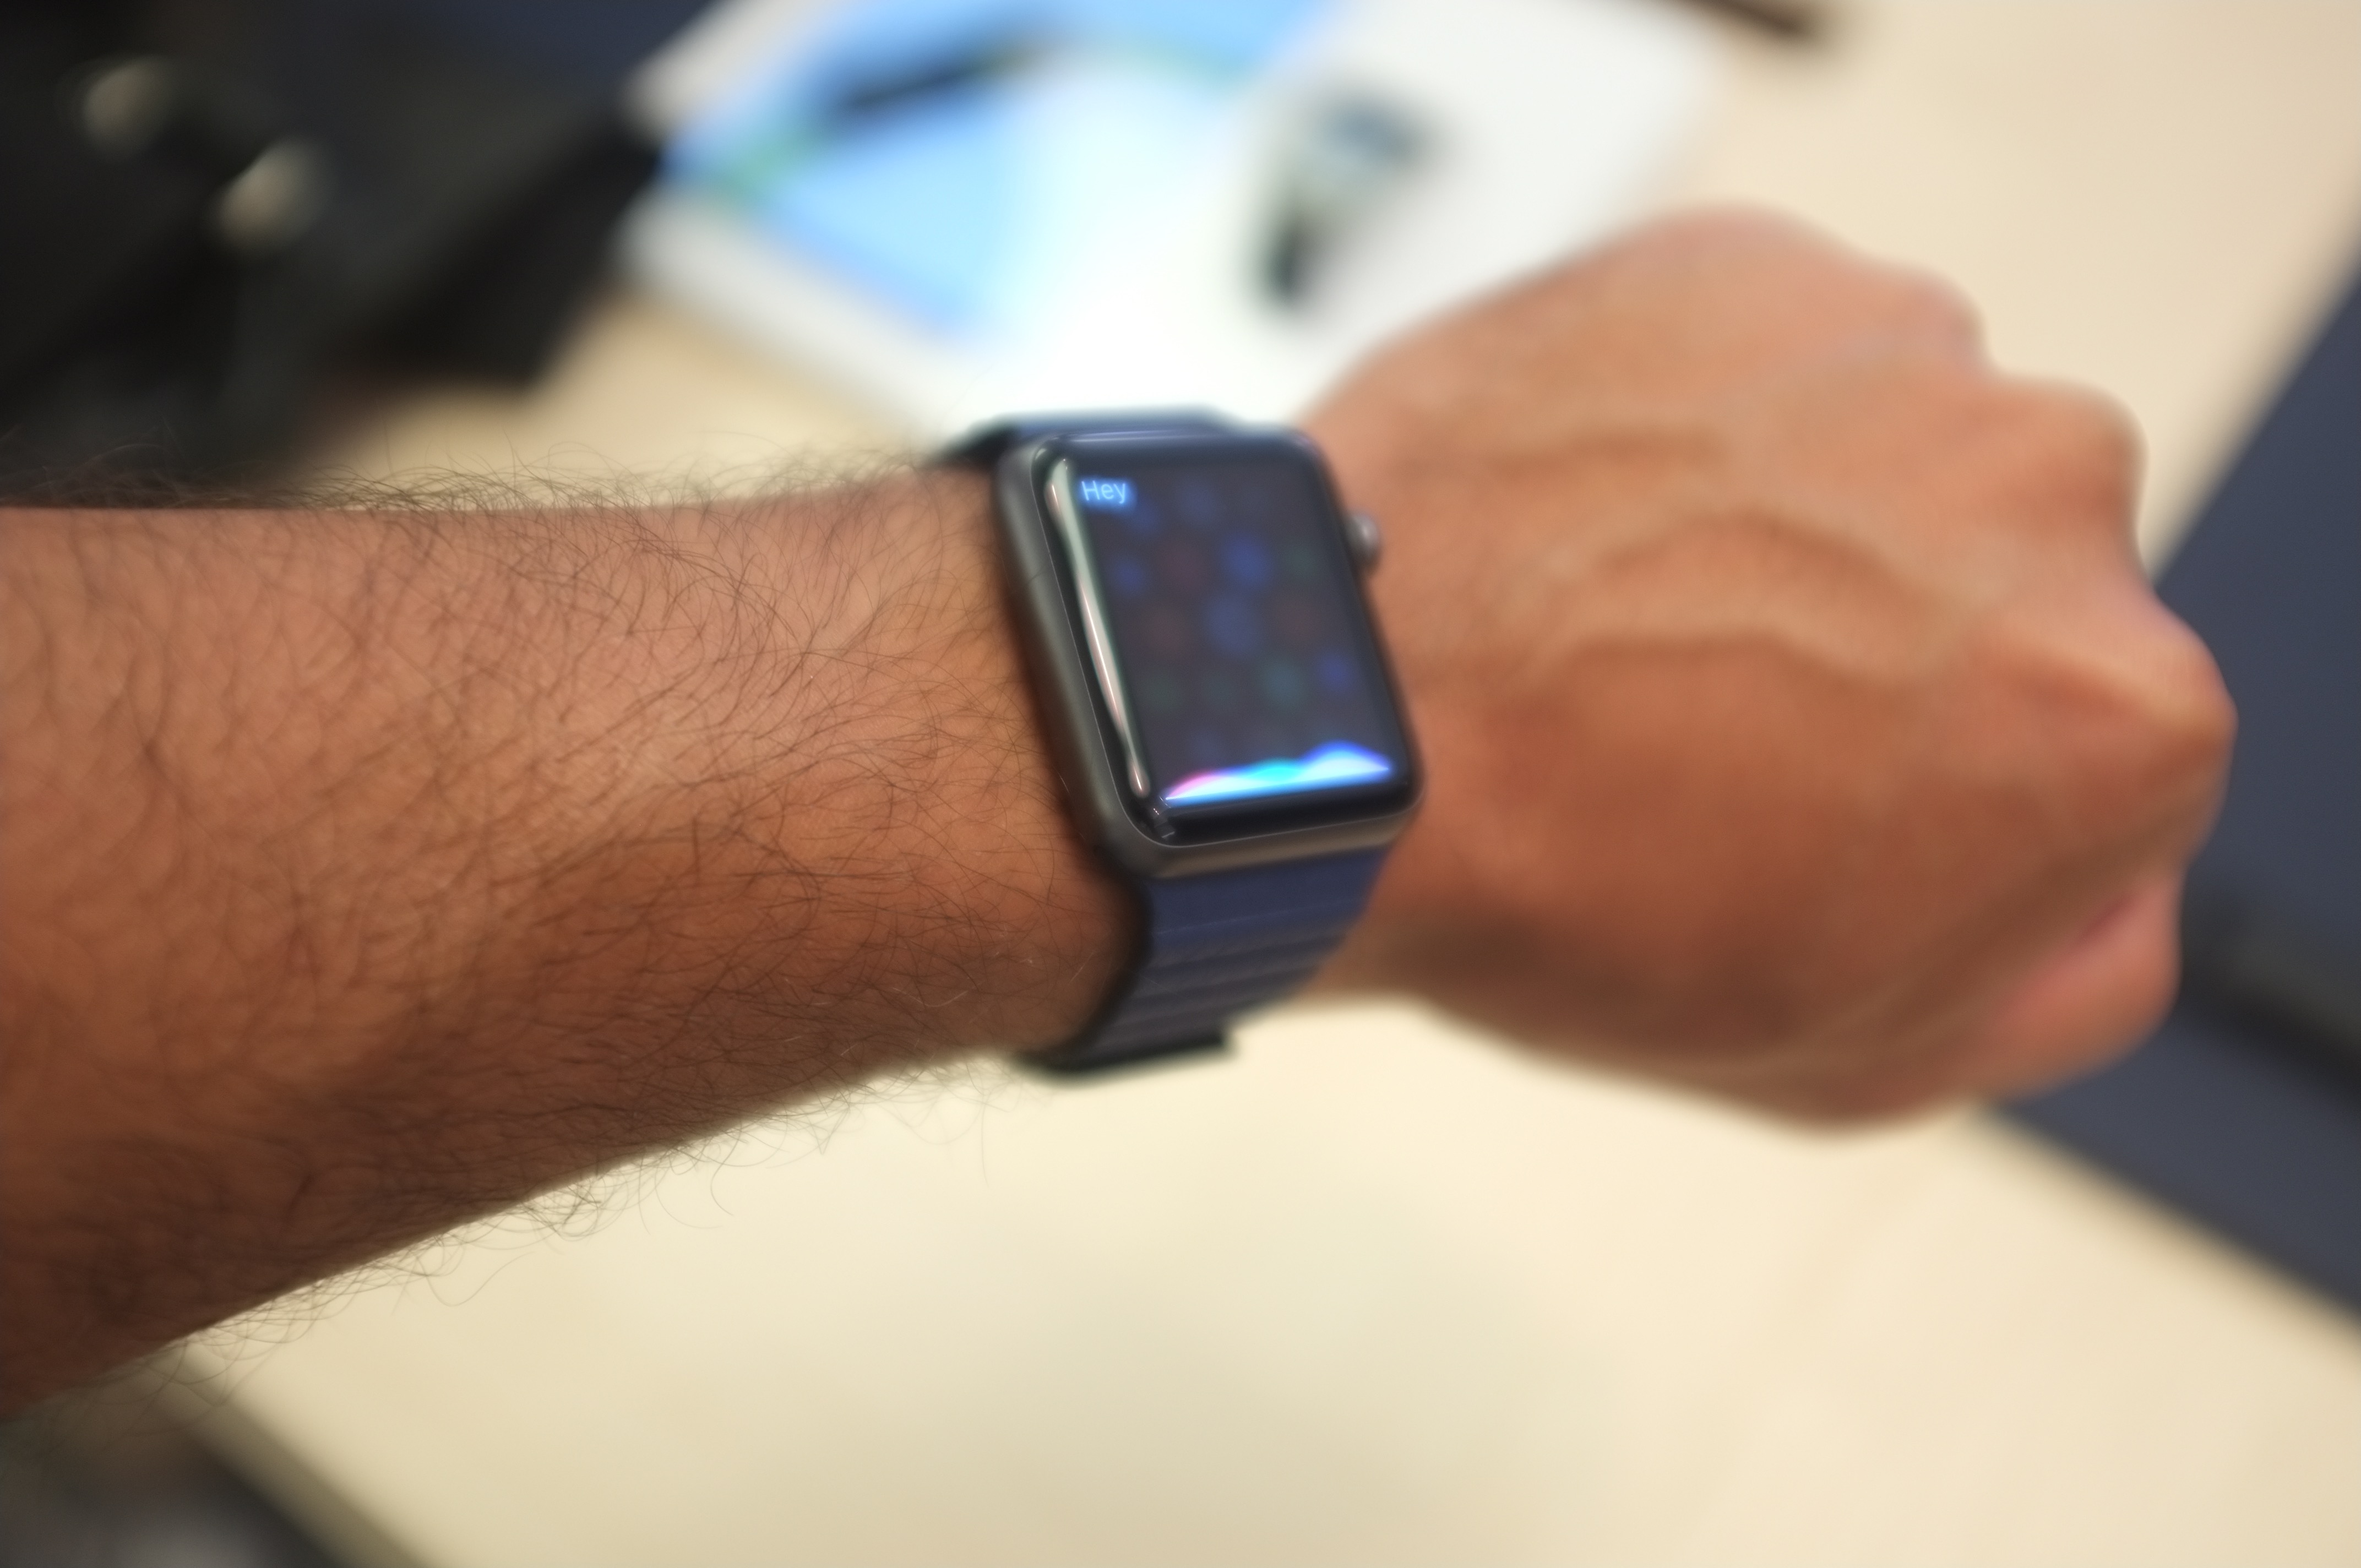 Apple Watch: Your future digital concierge